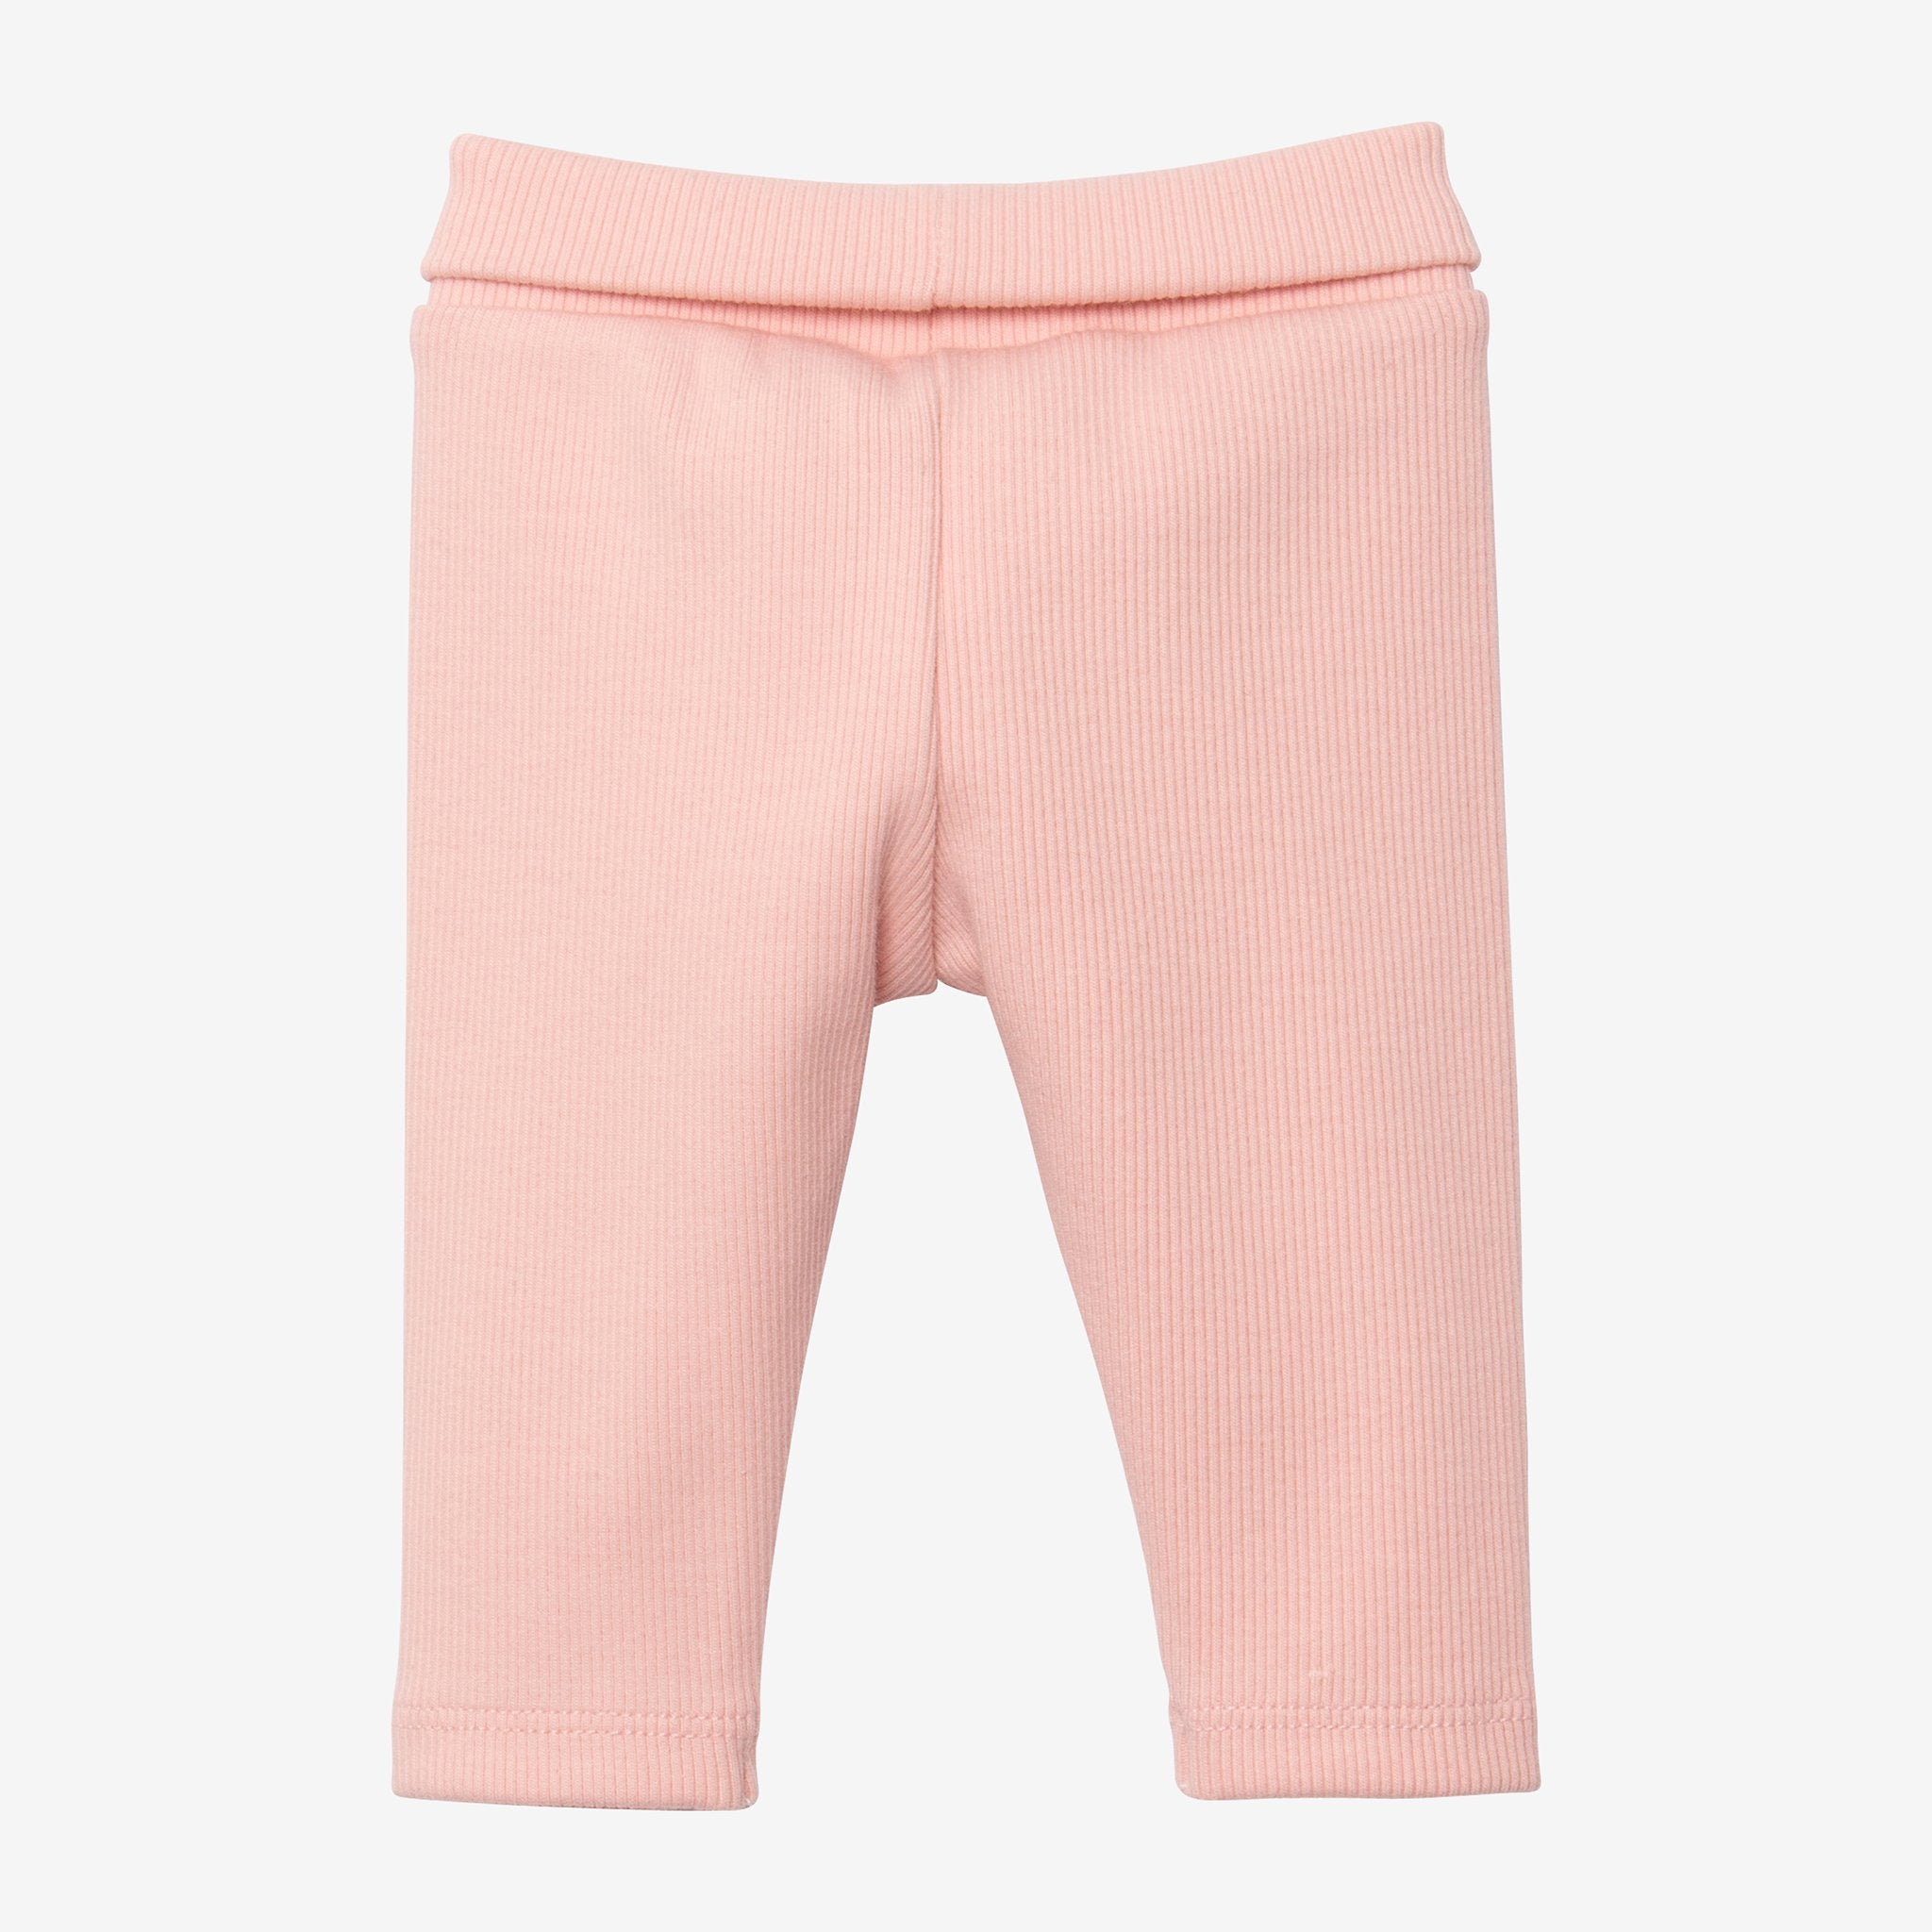 Details more than 167 childrens pink leggings best